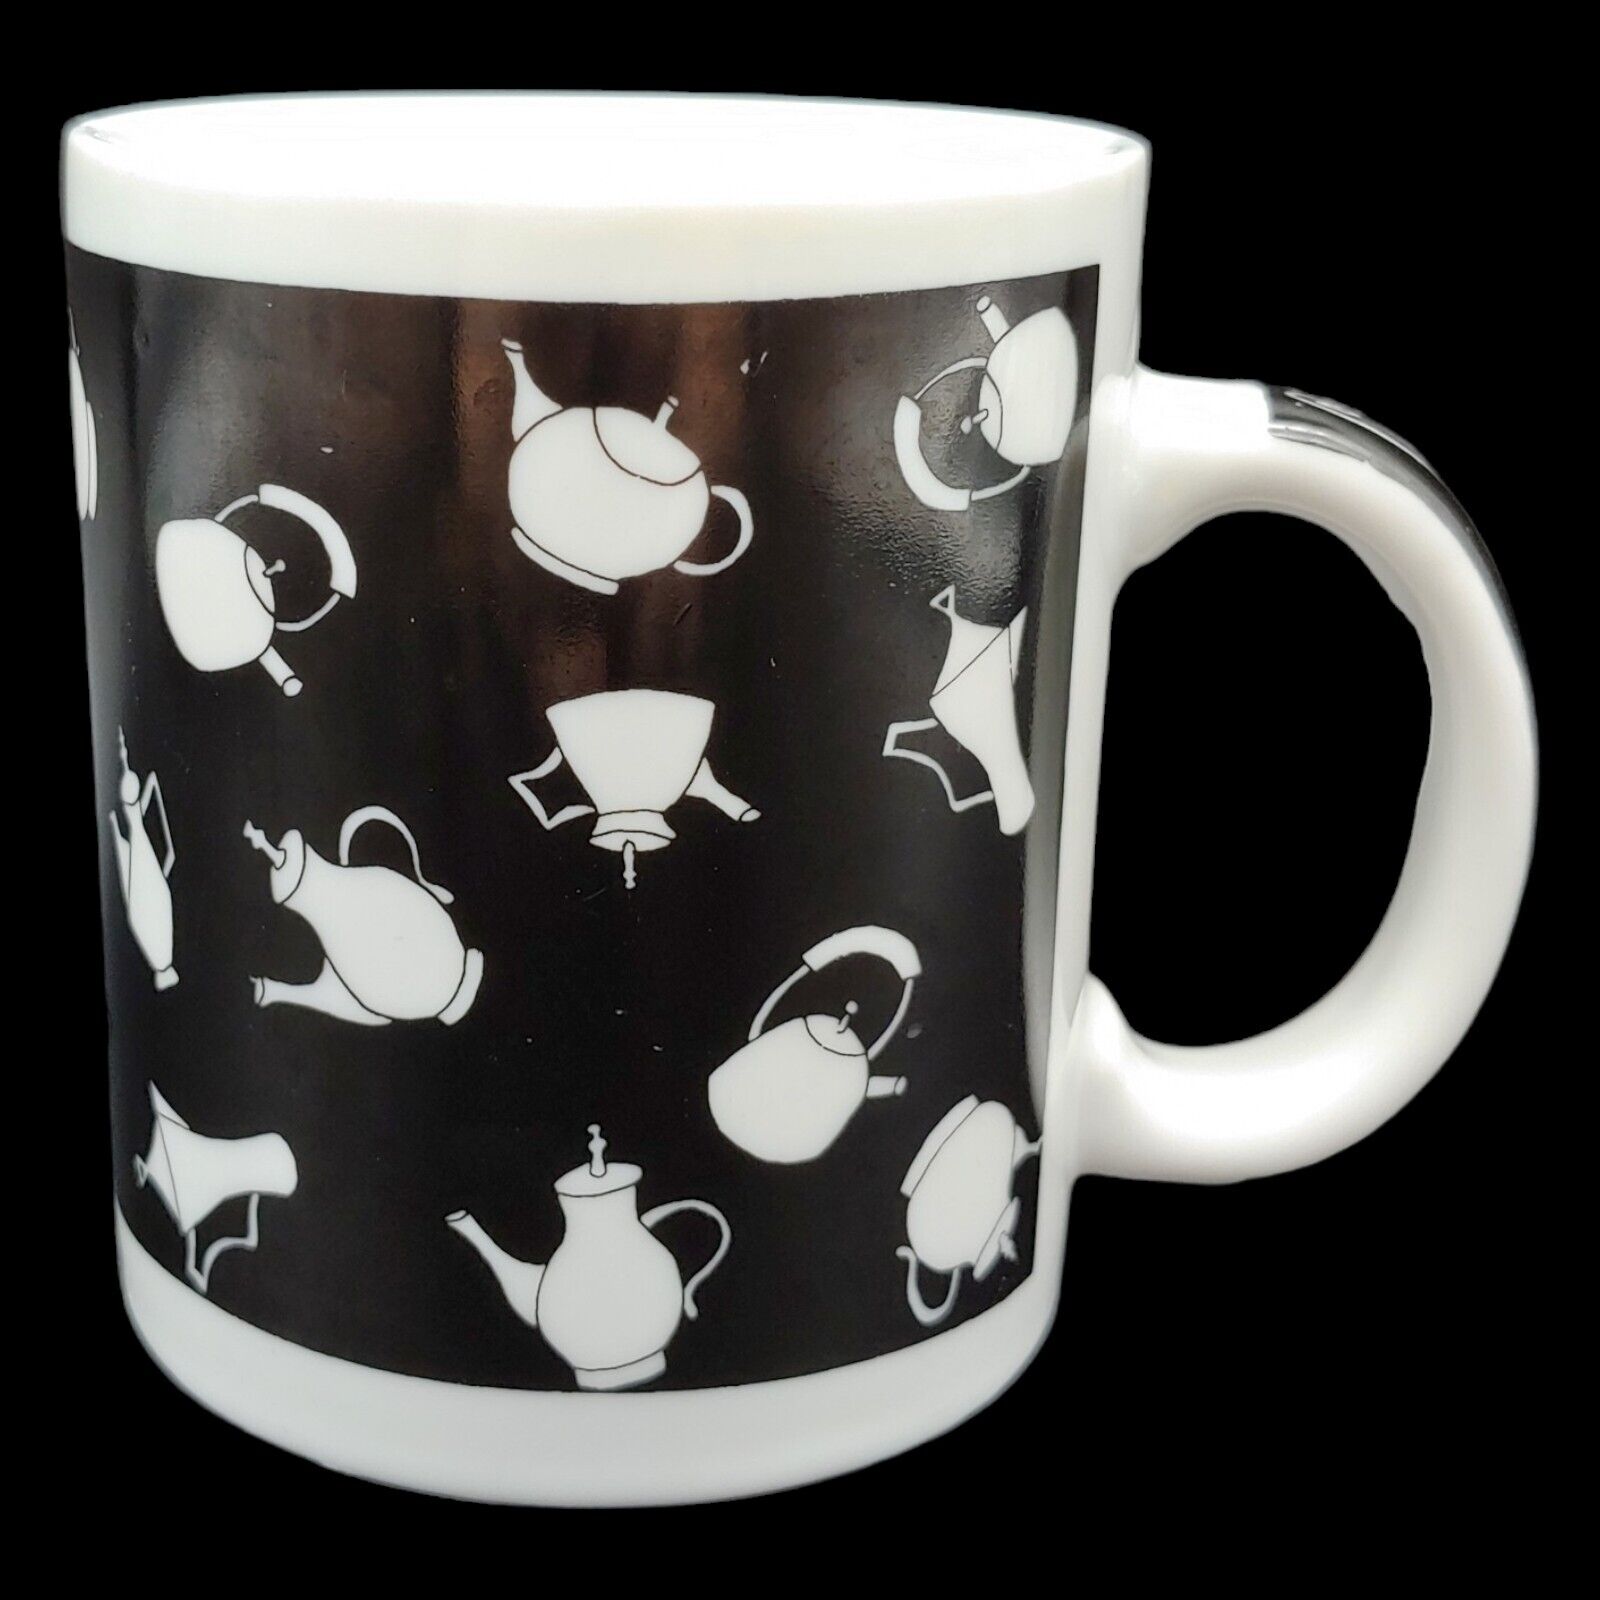 Chaleur Dan May Tea Pots Coffee Mug Cup - 14oz Large Black White Fun Whimsical